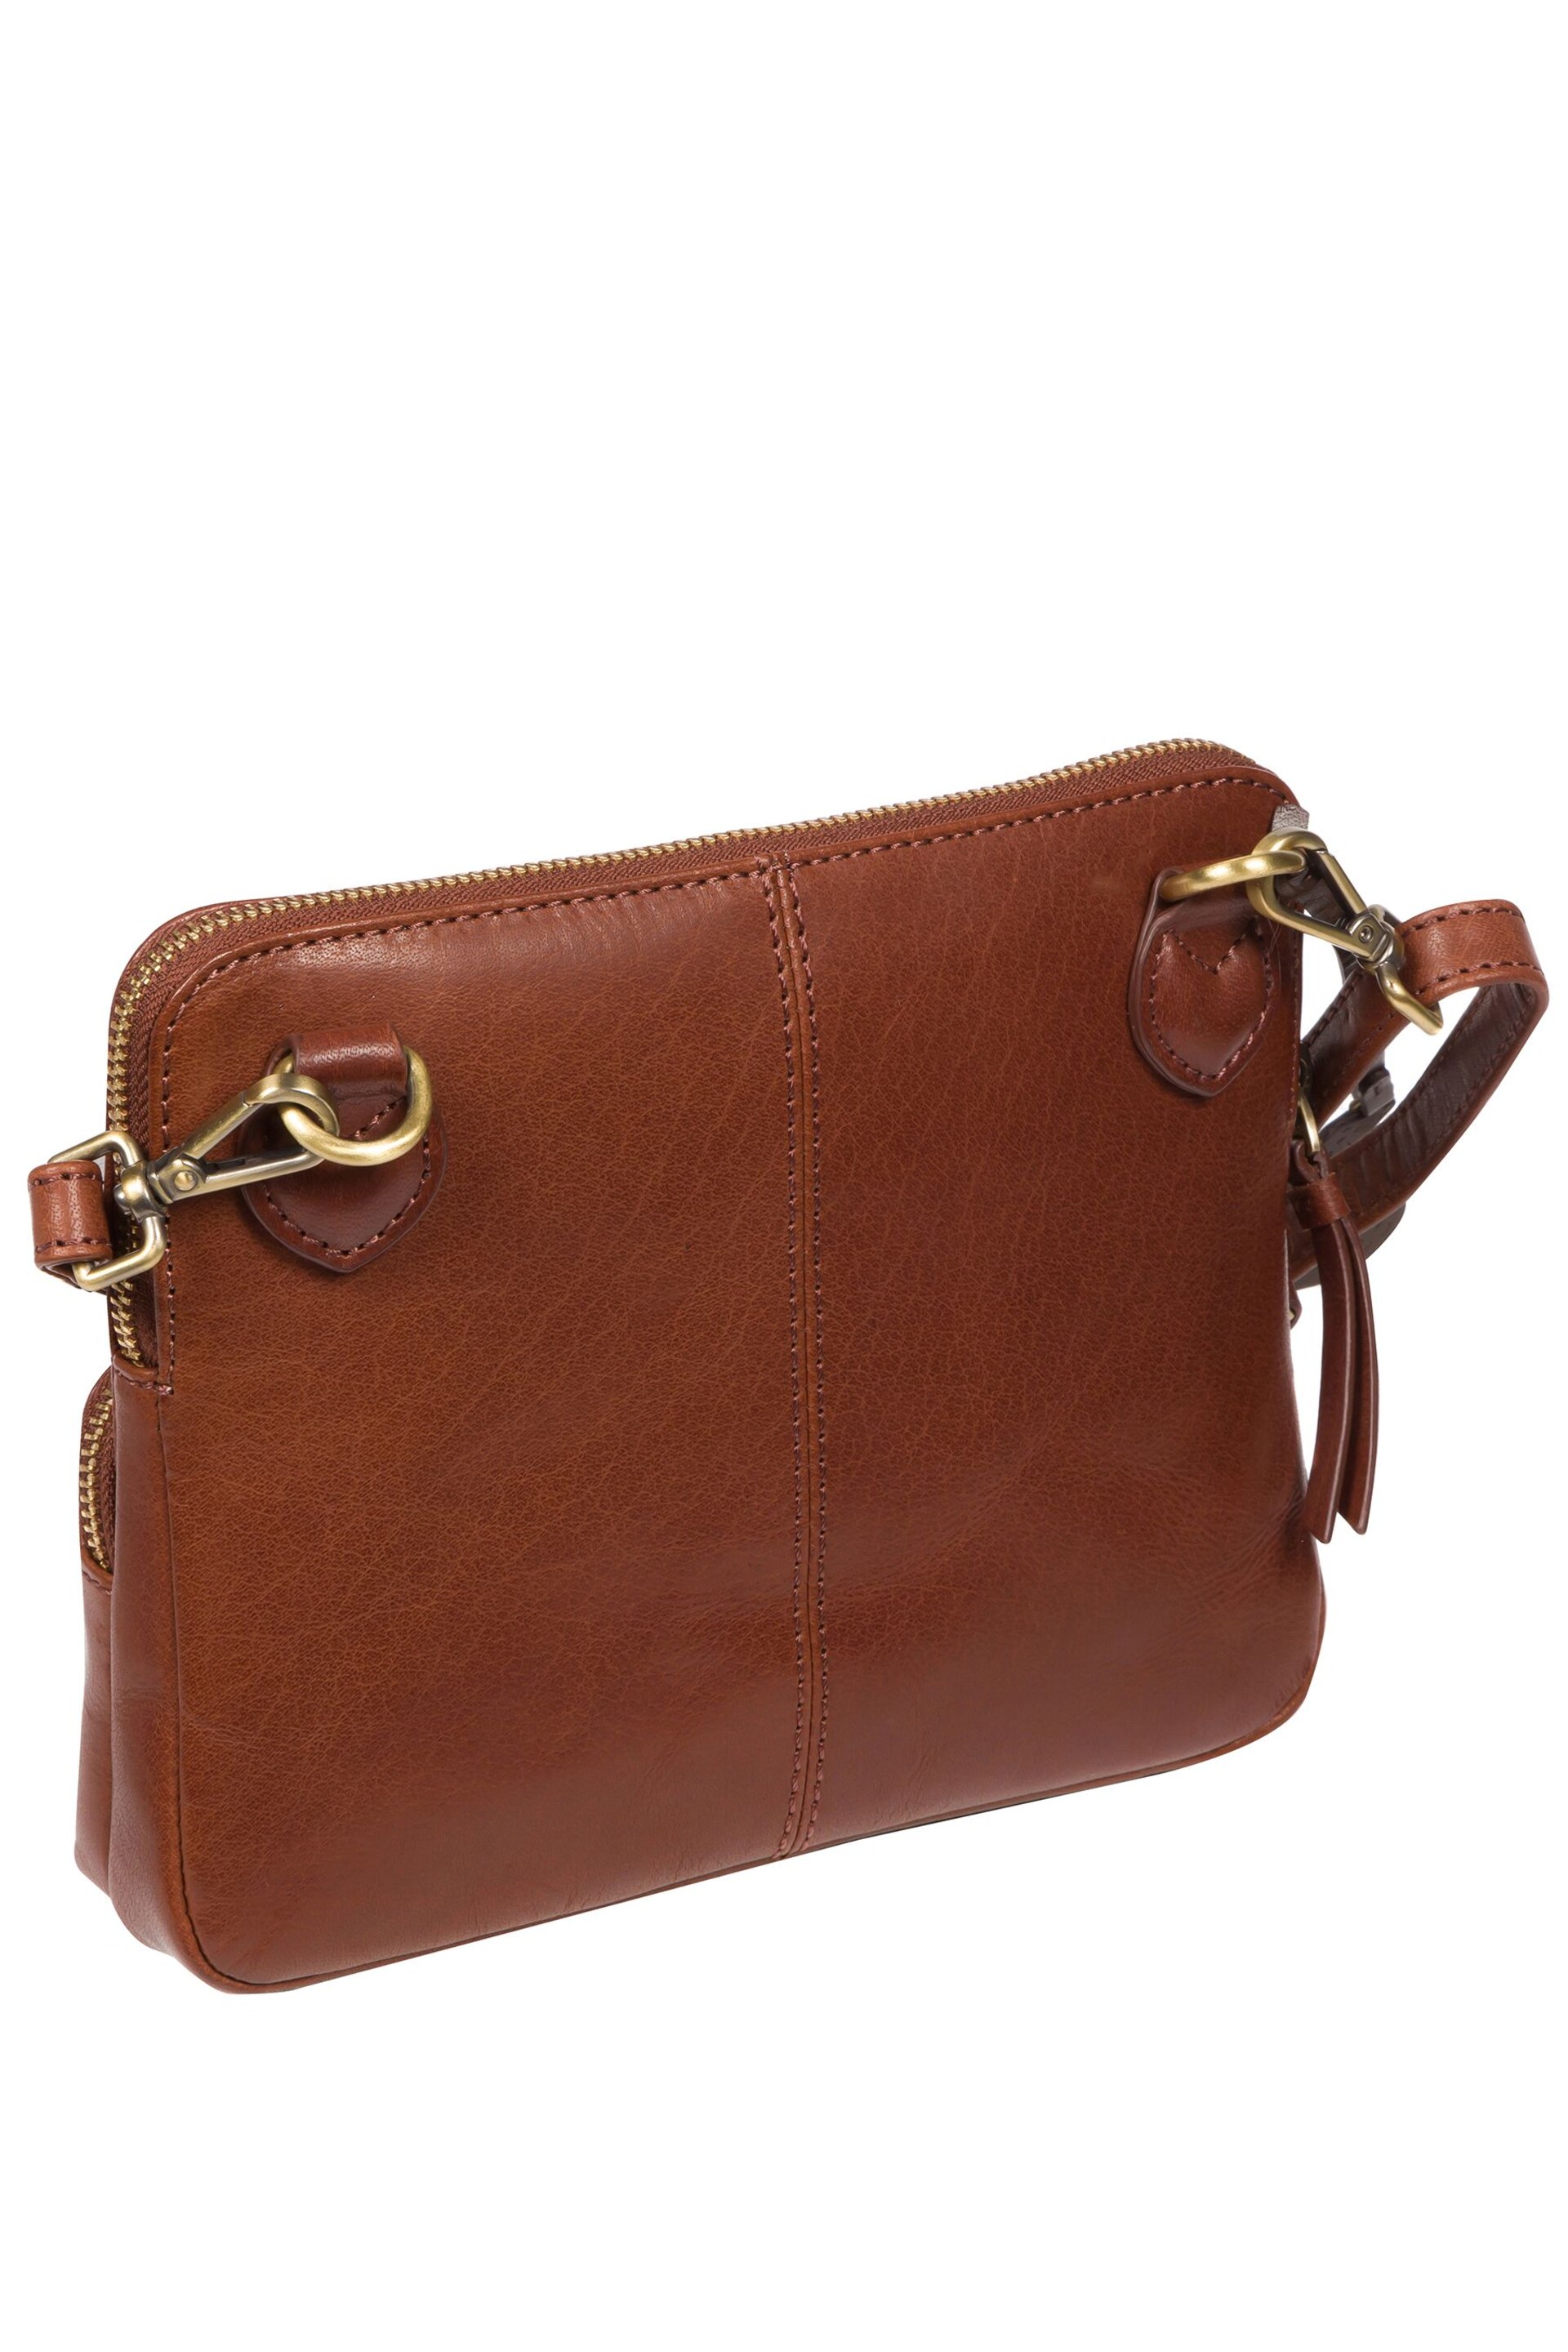 Conkca Angel Leather Cross-Body Clutch Bag - Image 2 of 4